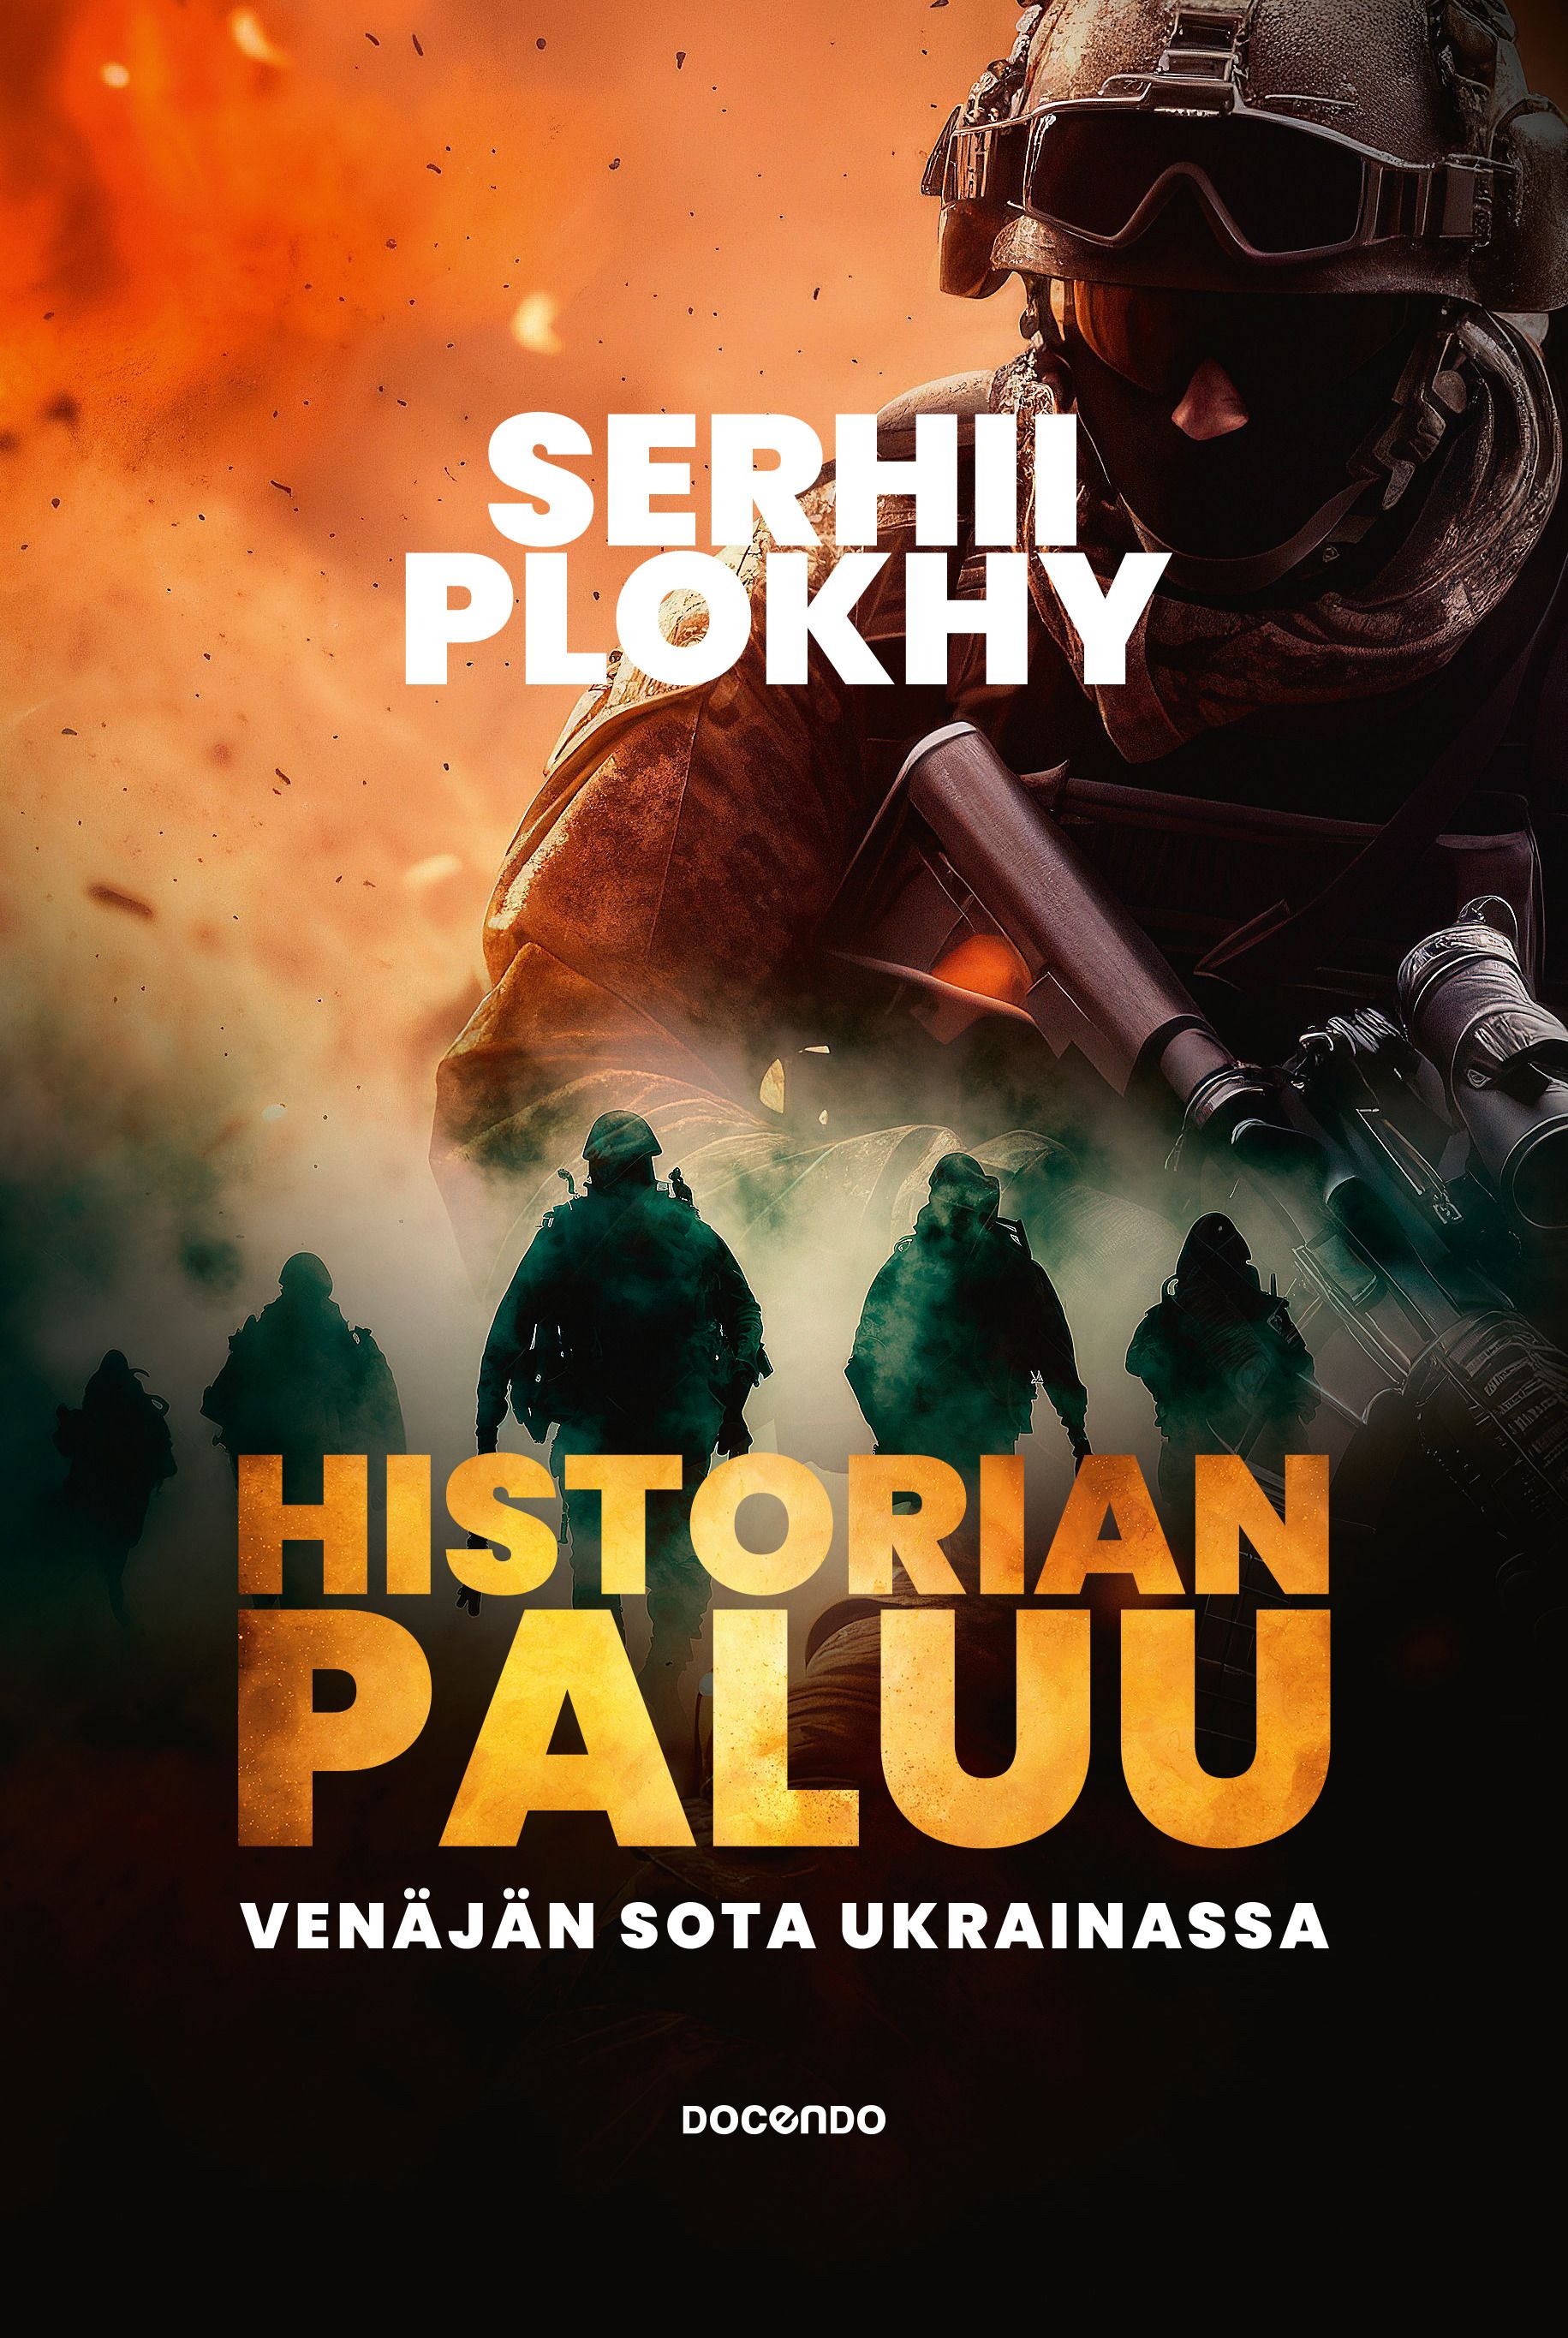 Serhii Plokhy : Historian paluu